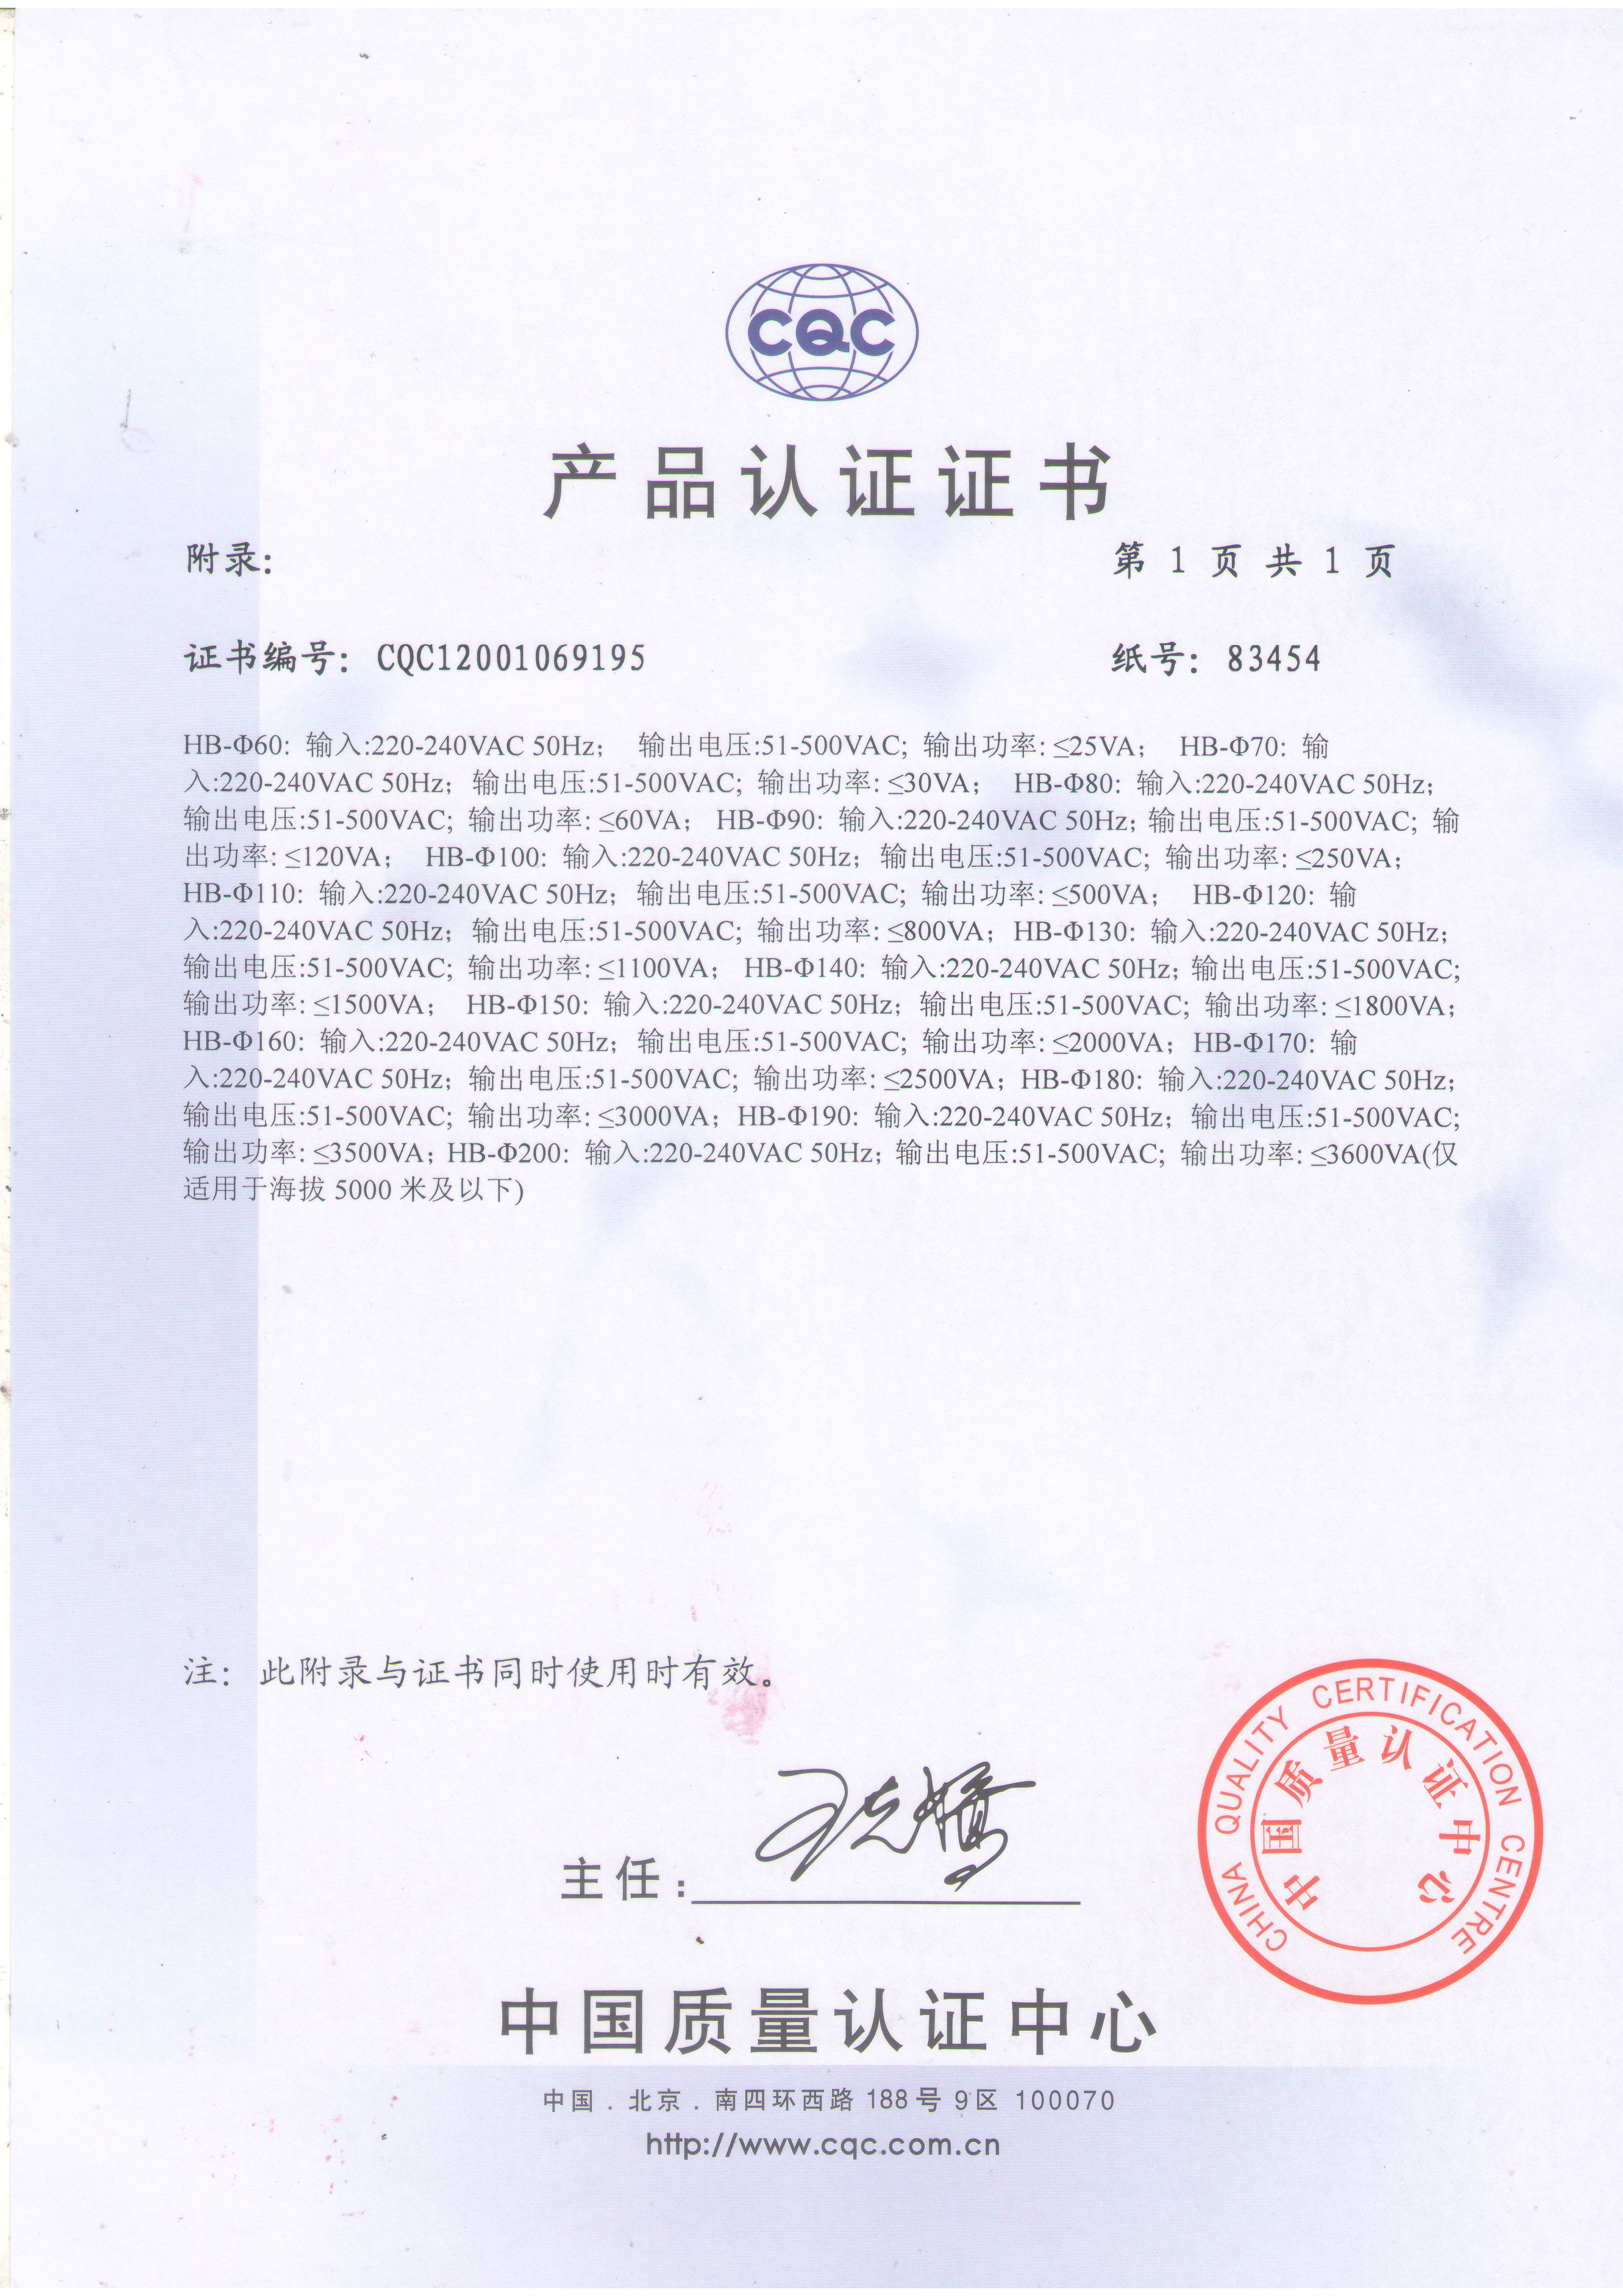 Ring CQC Certificate appendix 